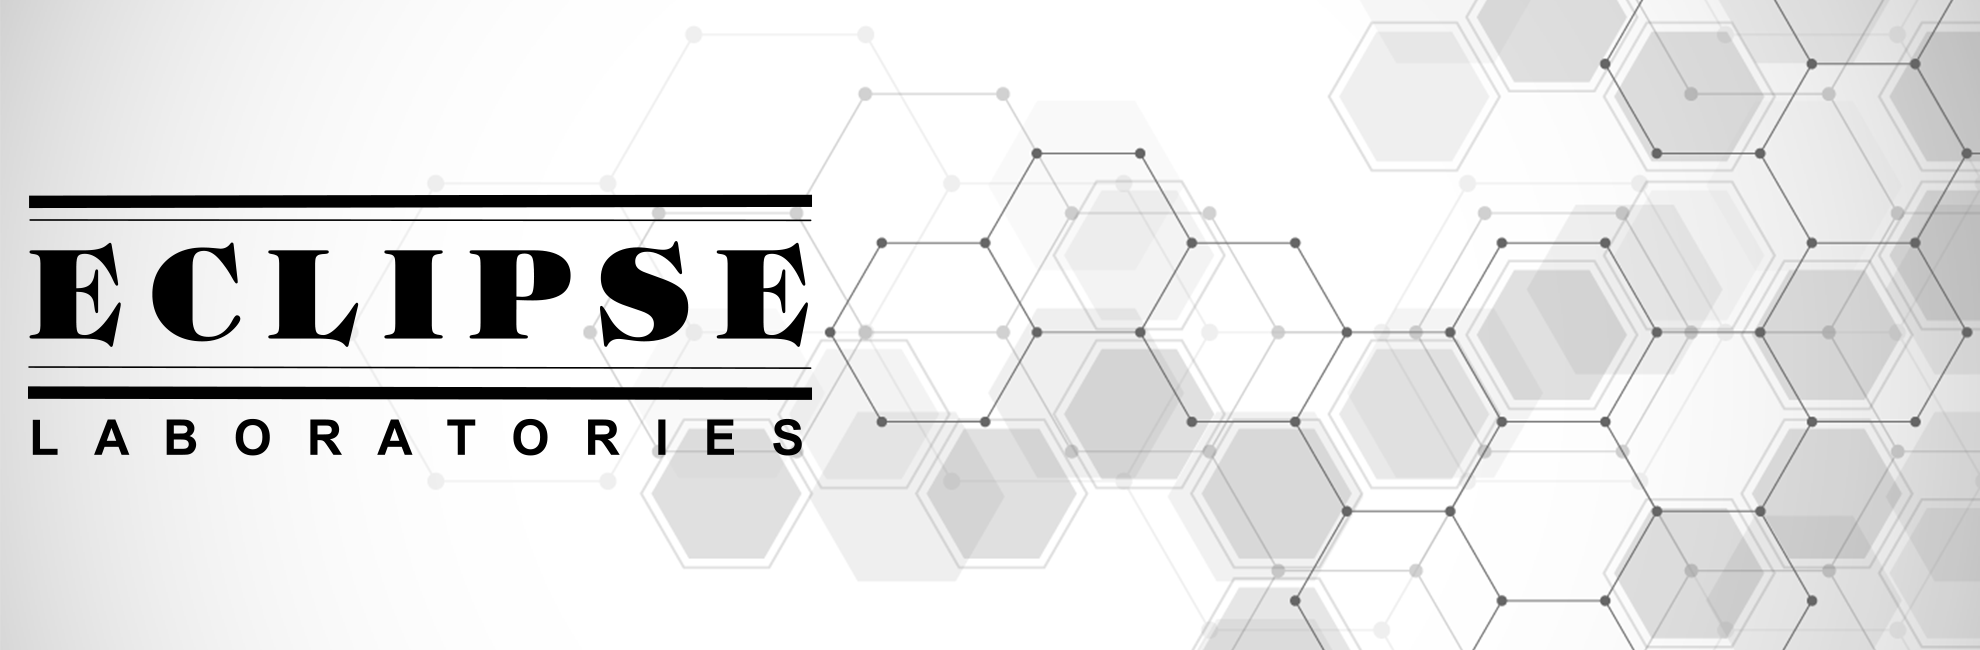 Eclipse Labs logo